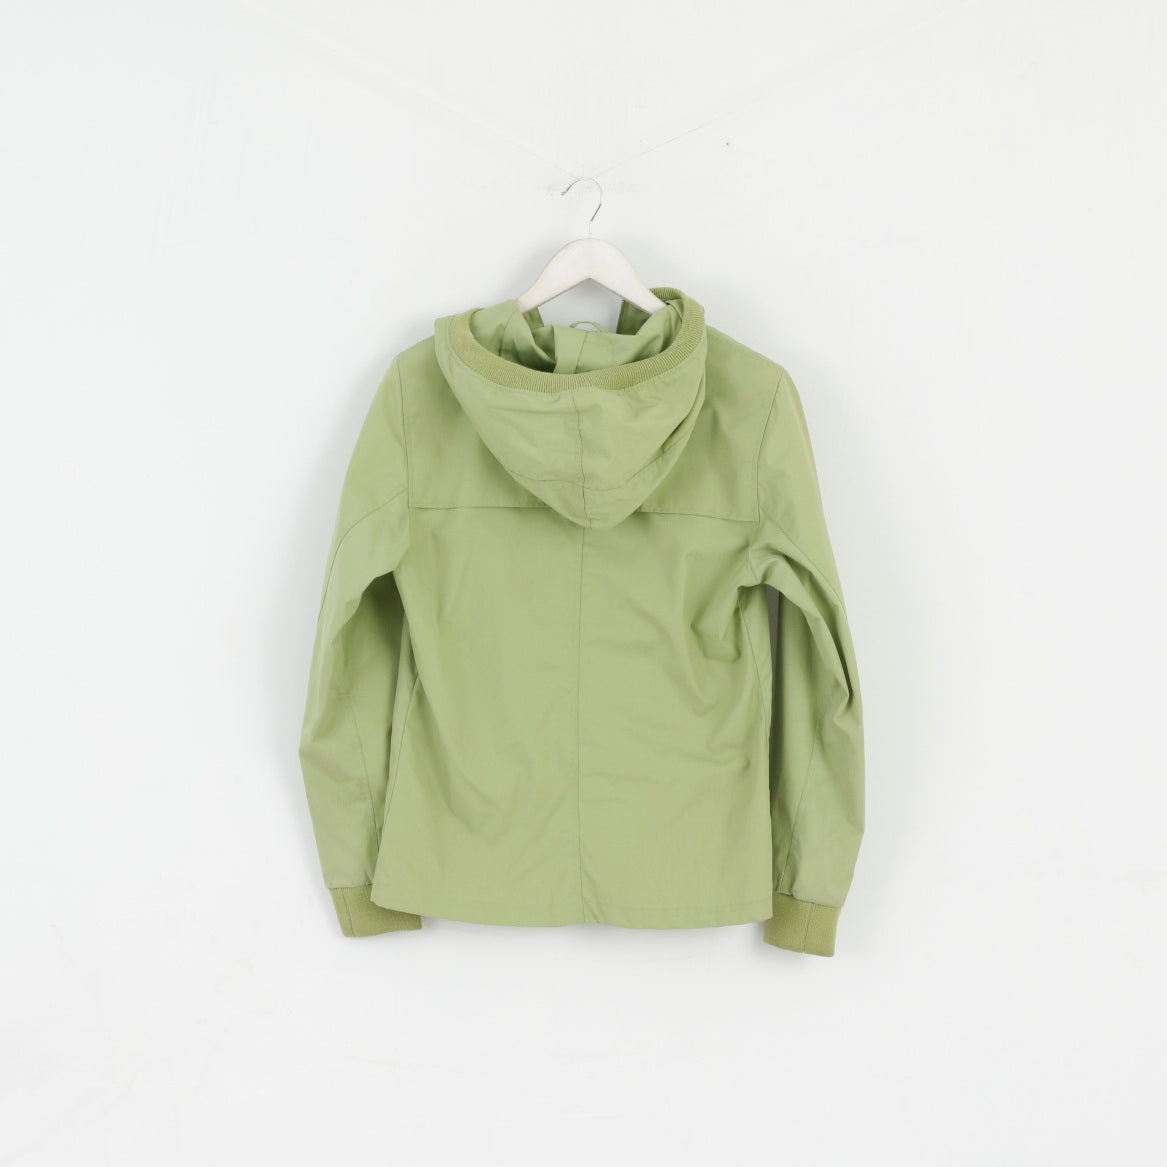 Peak Performance Women S Jacket Green Cotton Blend Hooded Kasy J Style Top